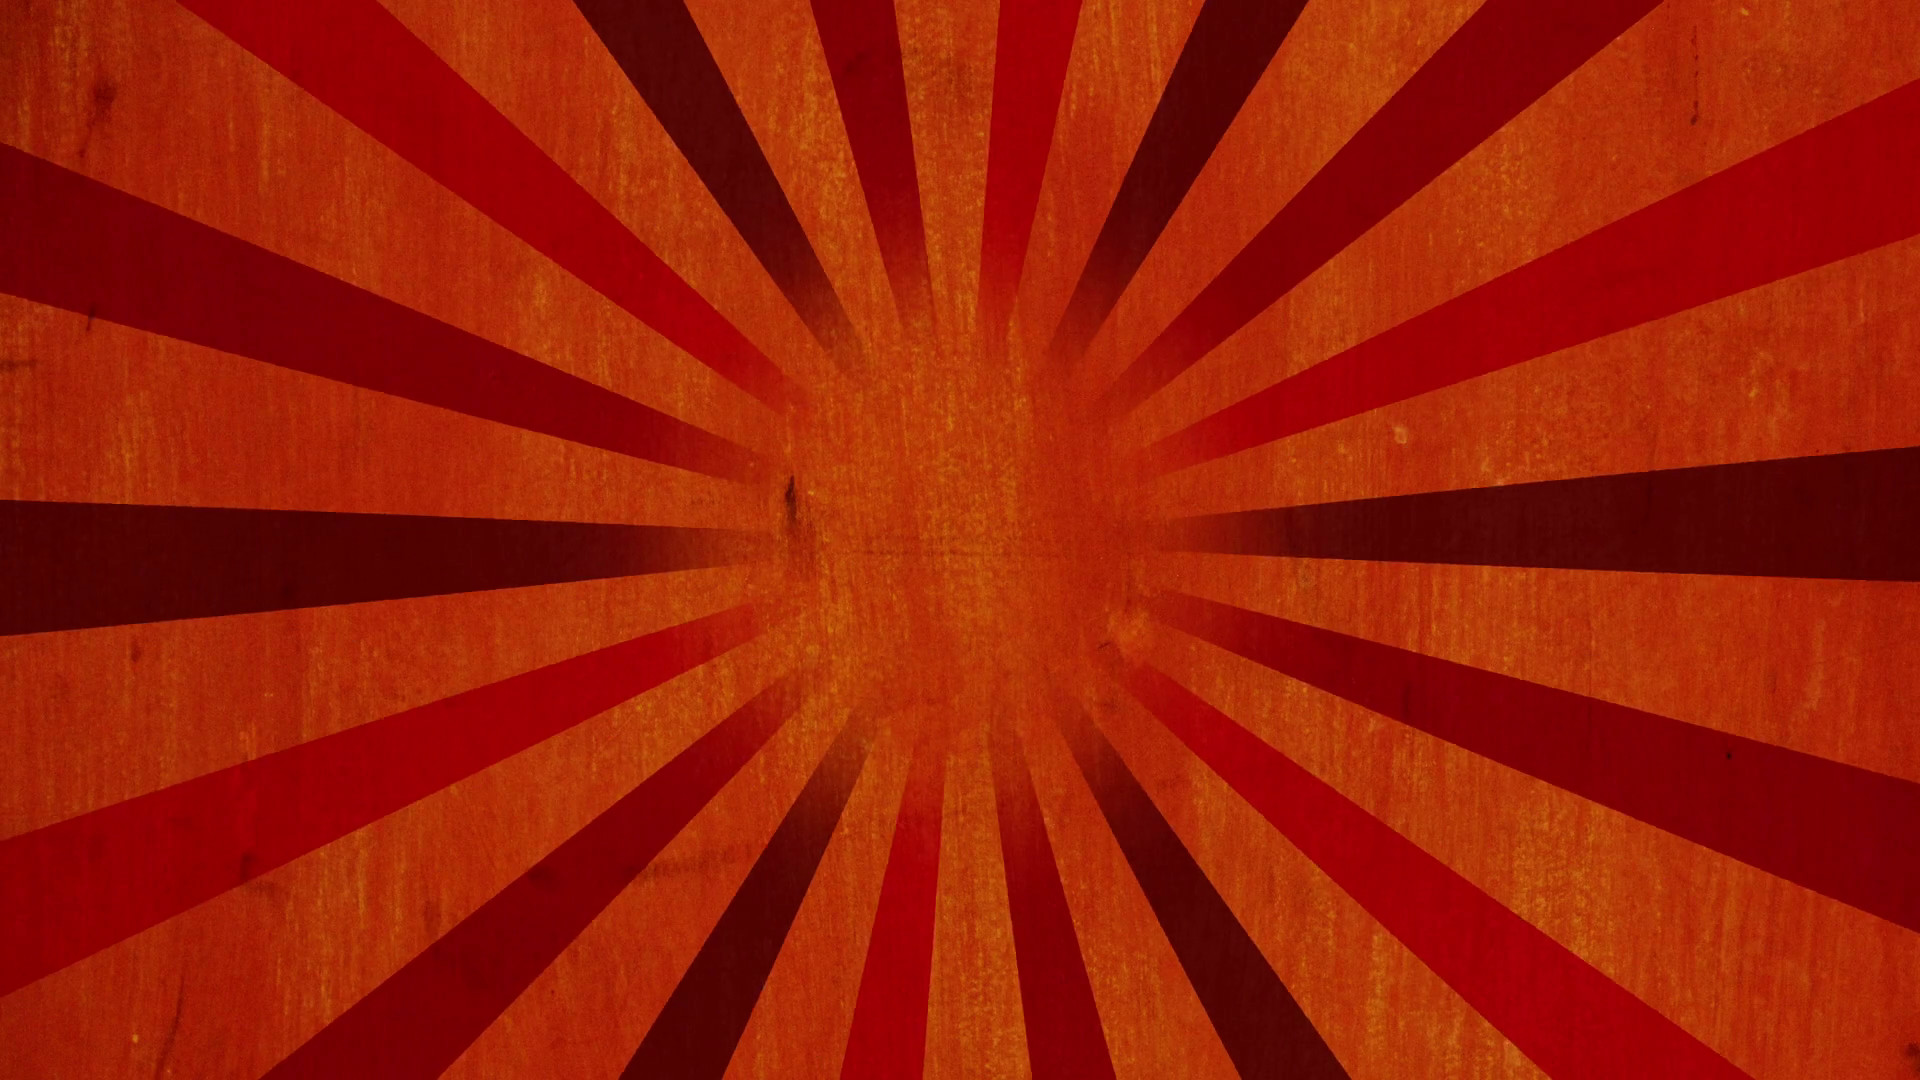 1920x1080 Multicolor grunge texture orange and red Burst vector background. Nice  vintage cartoon paper textured sunburst